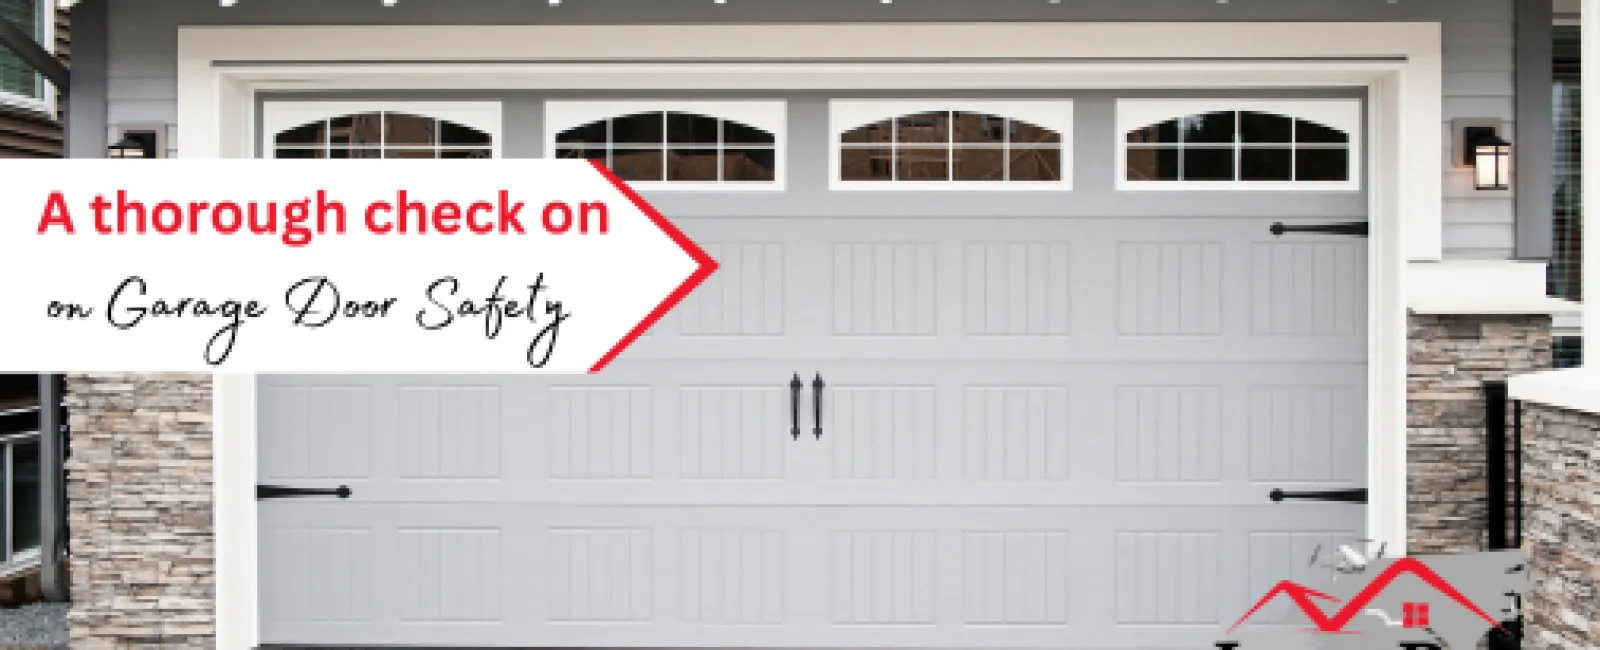 A thorough check on Garage Door Safety